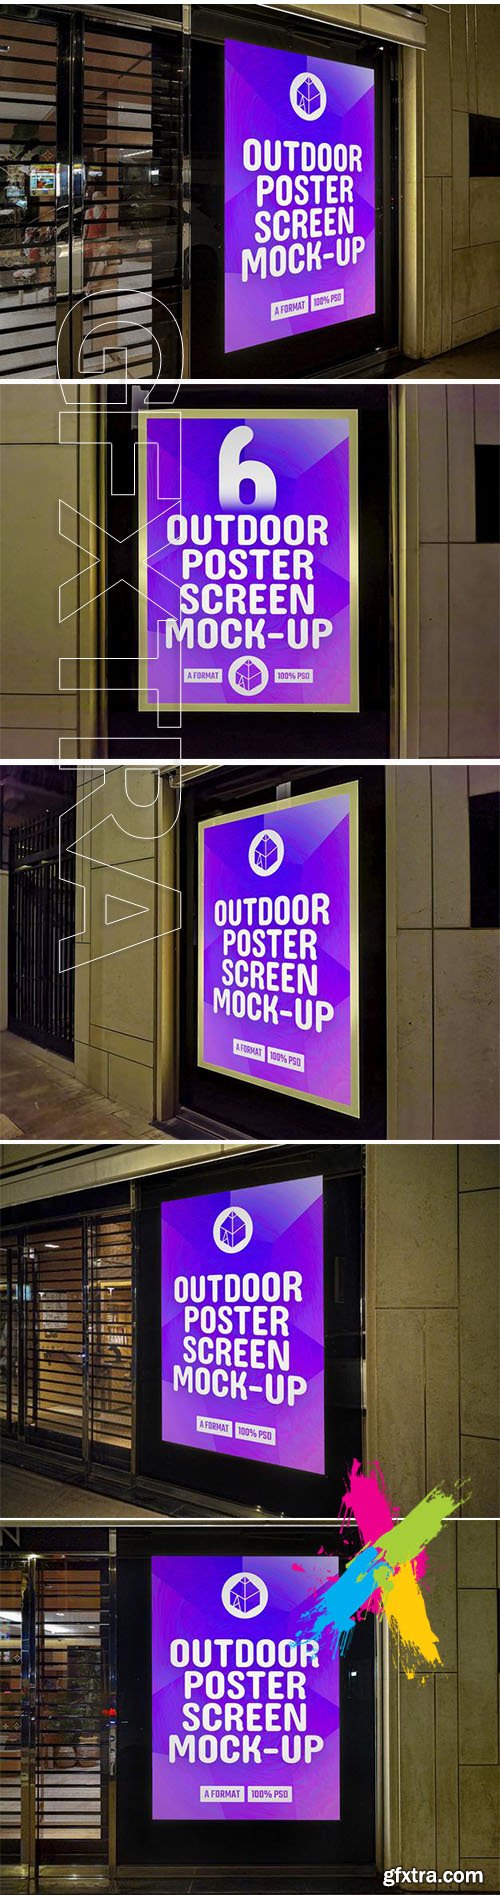 Outdoor poster screen